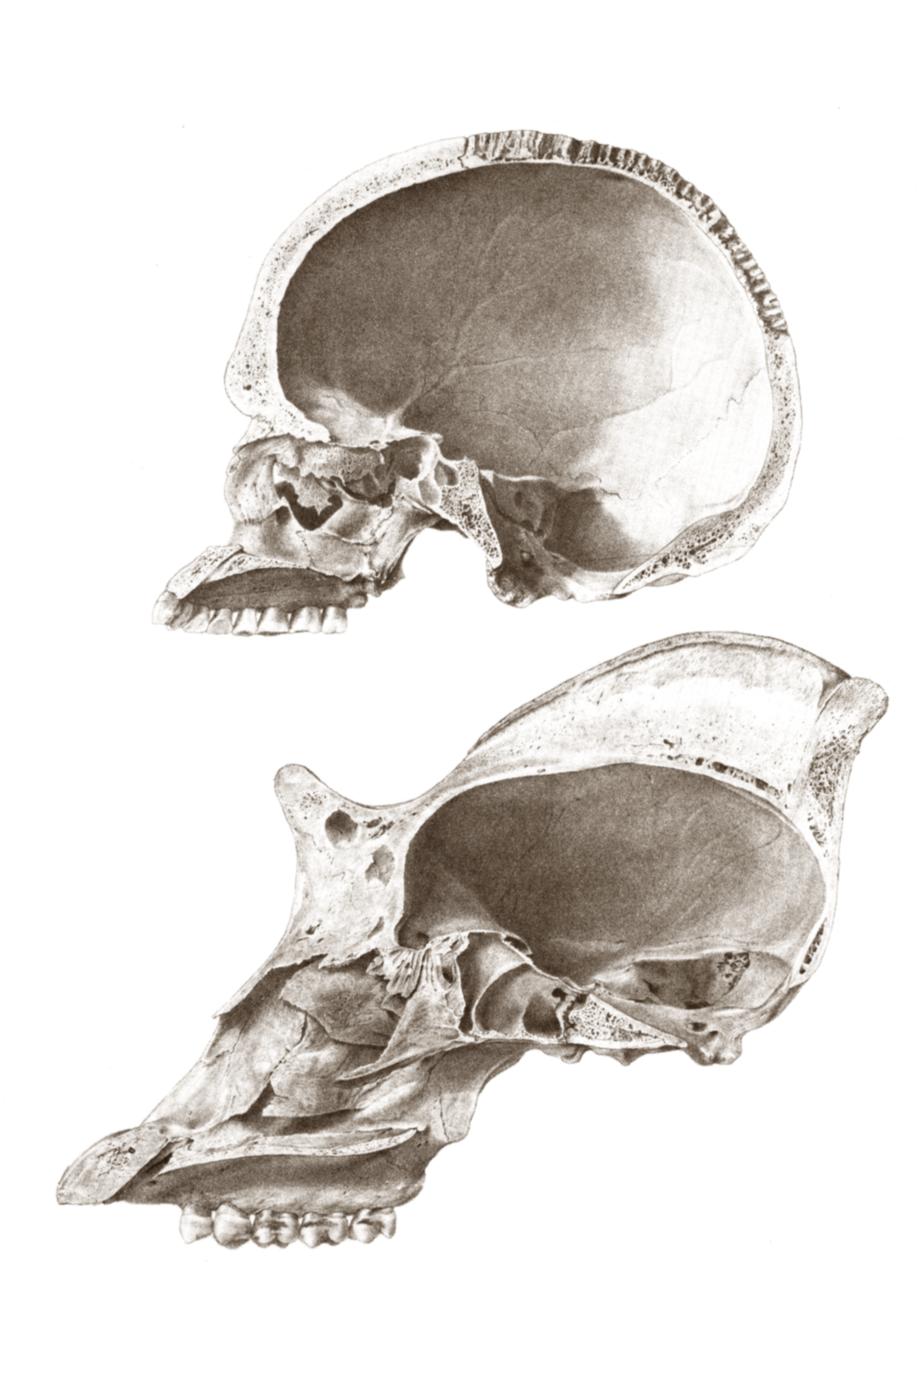 Gorilla and Human Skull